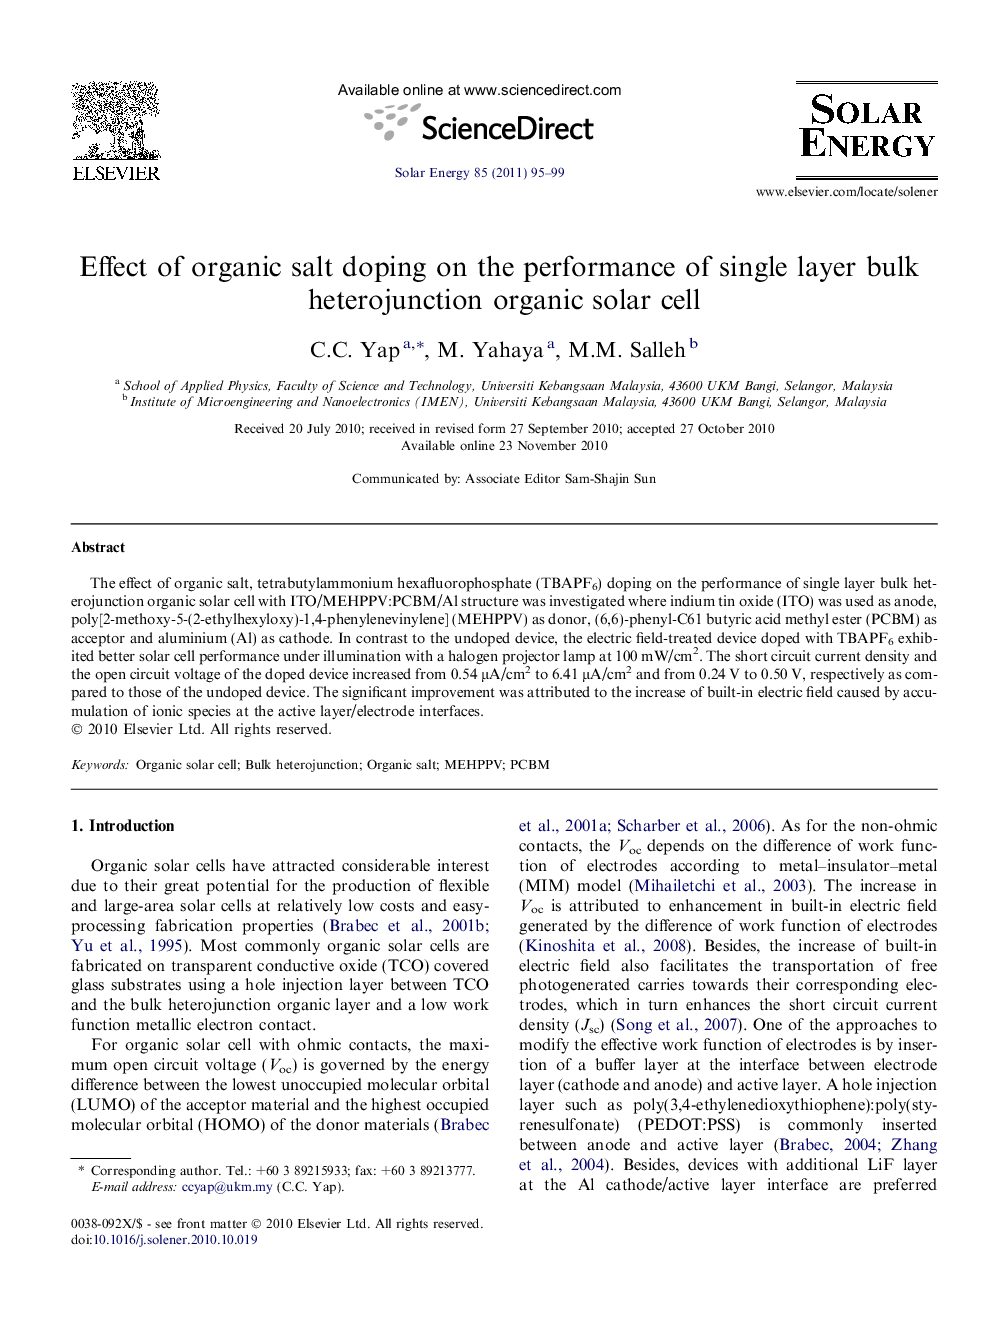 Effect of organic salt doping on the performance of single layer bulk heterojunction organic solar cell